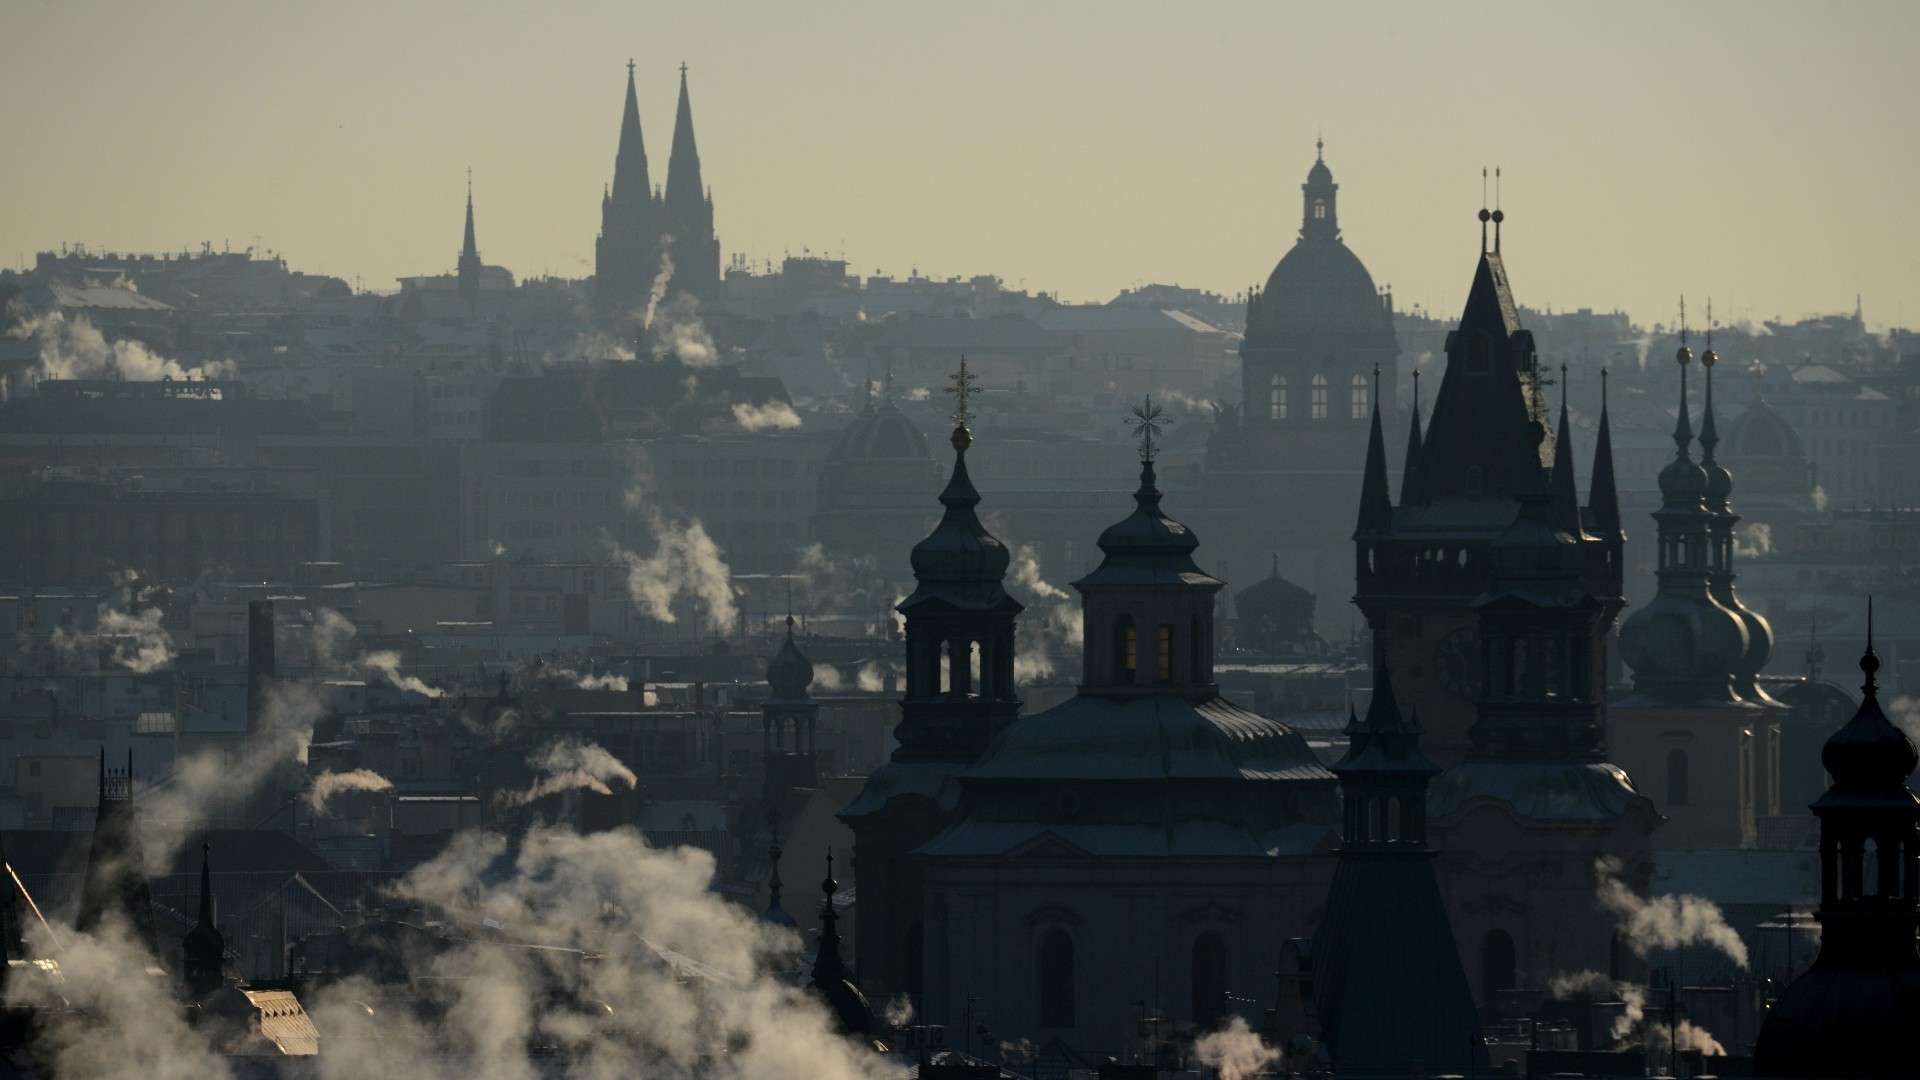 Prague general view